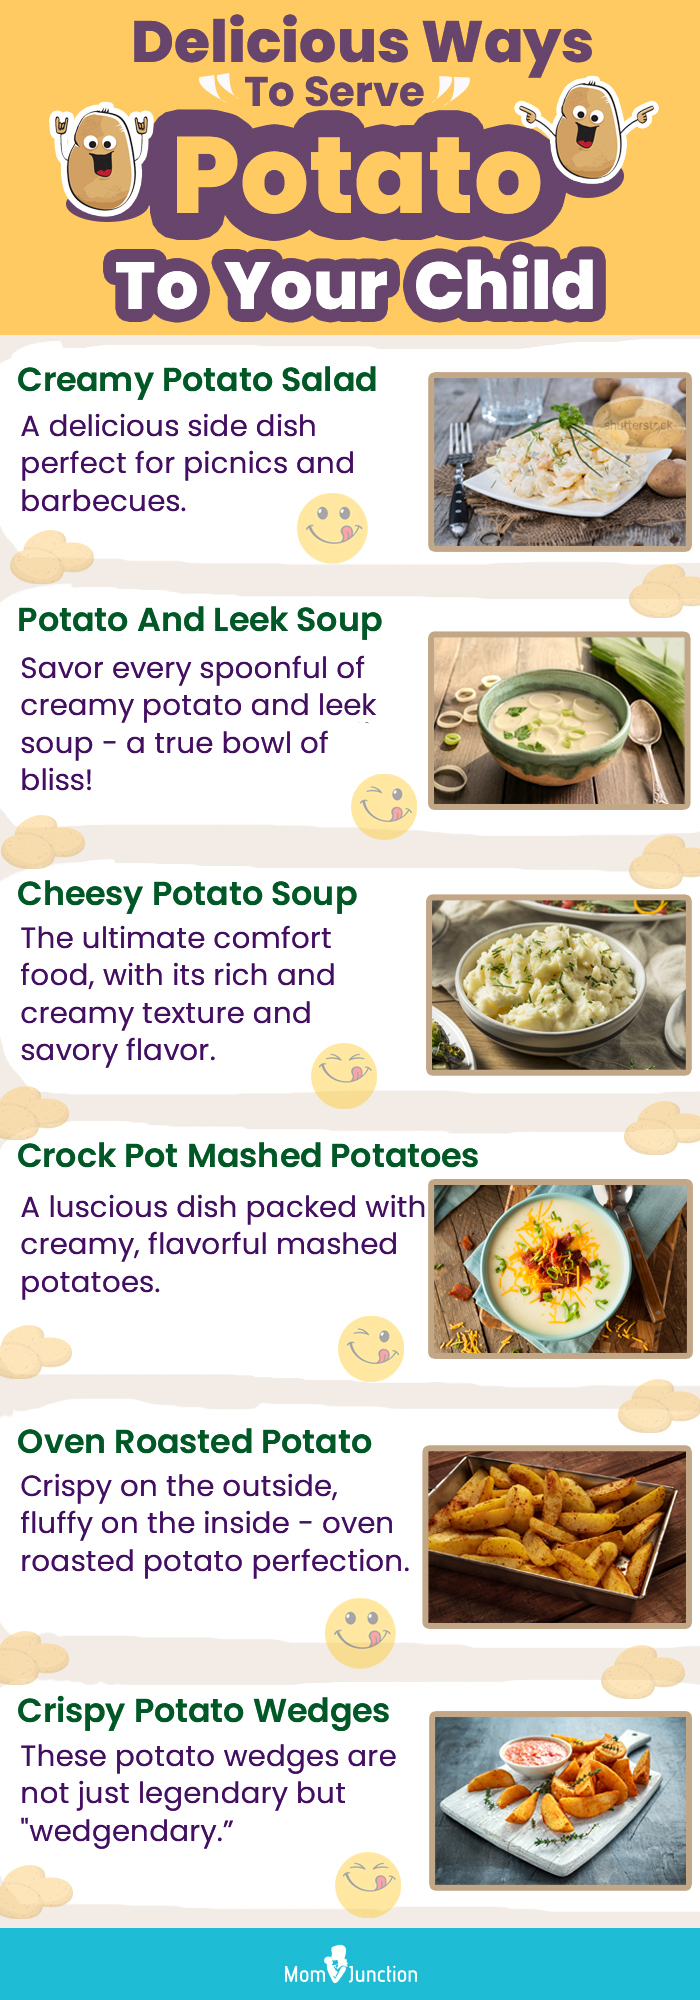 delicious ways to serve potato to your child (infographic)